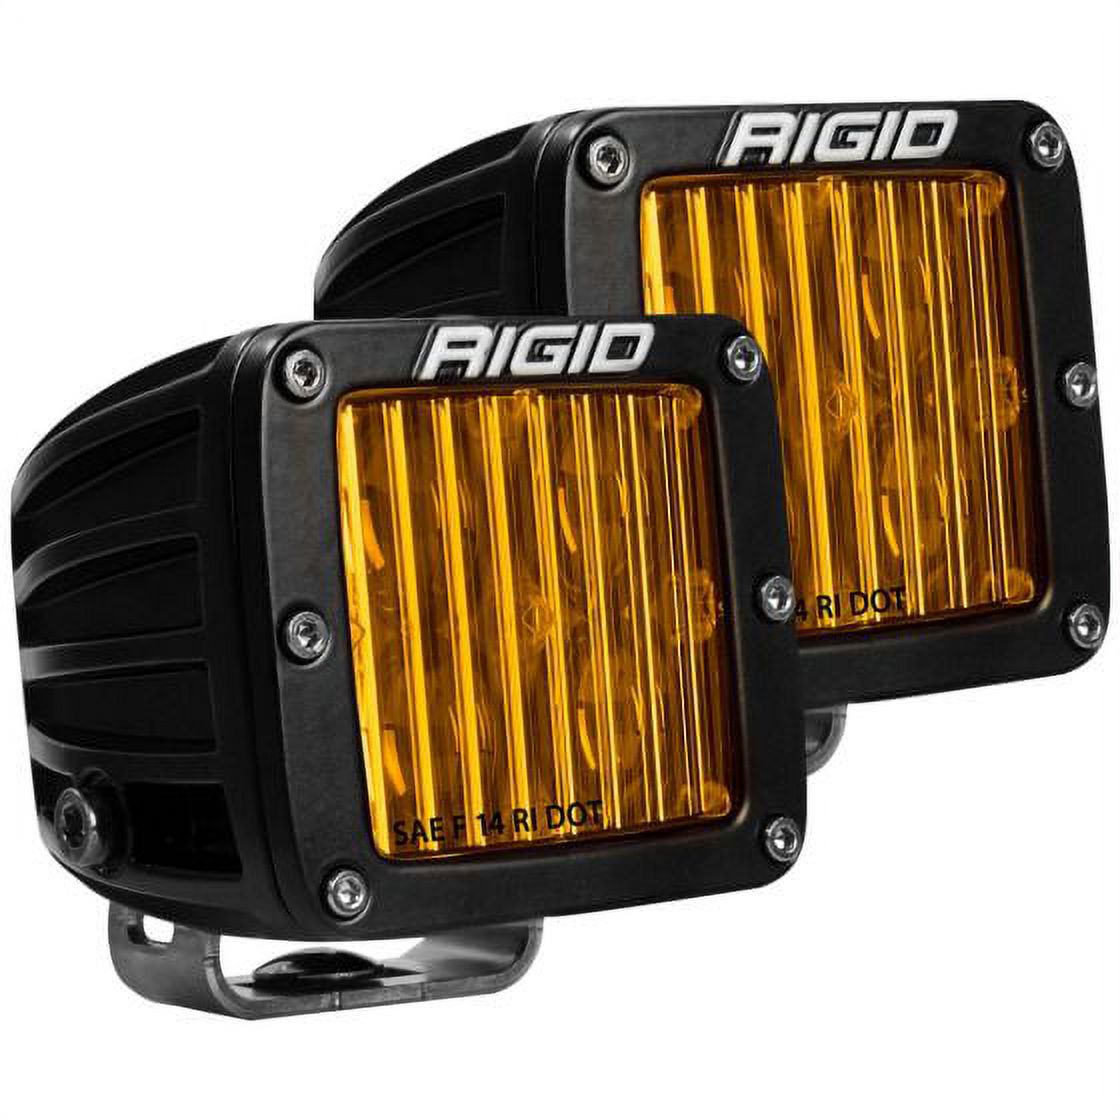 Rigid Indtries 504814 D Series Pro Fog Light - image 4 of 4